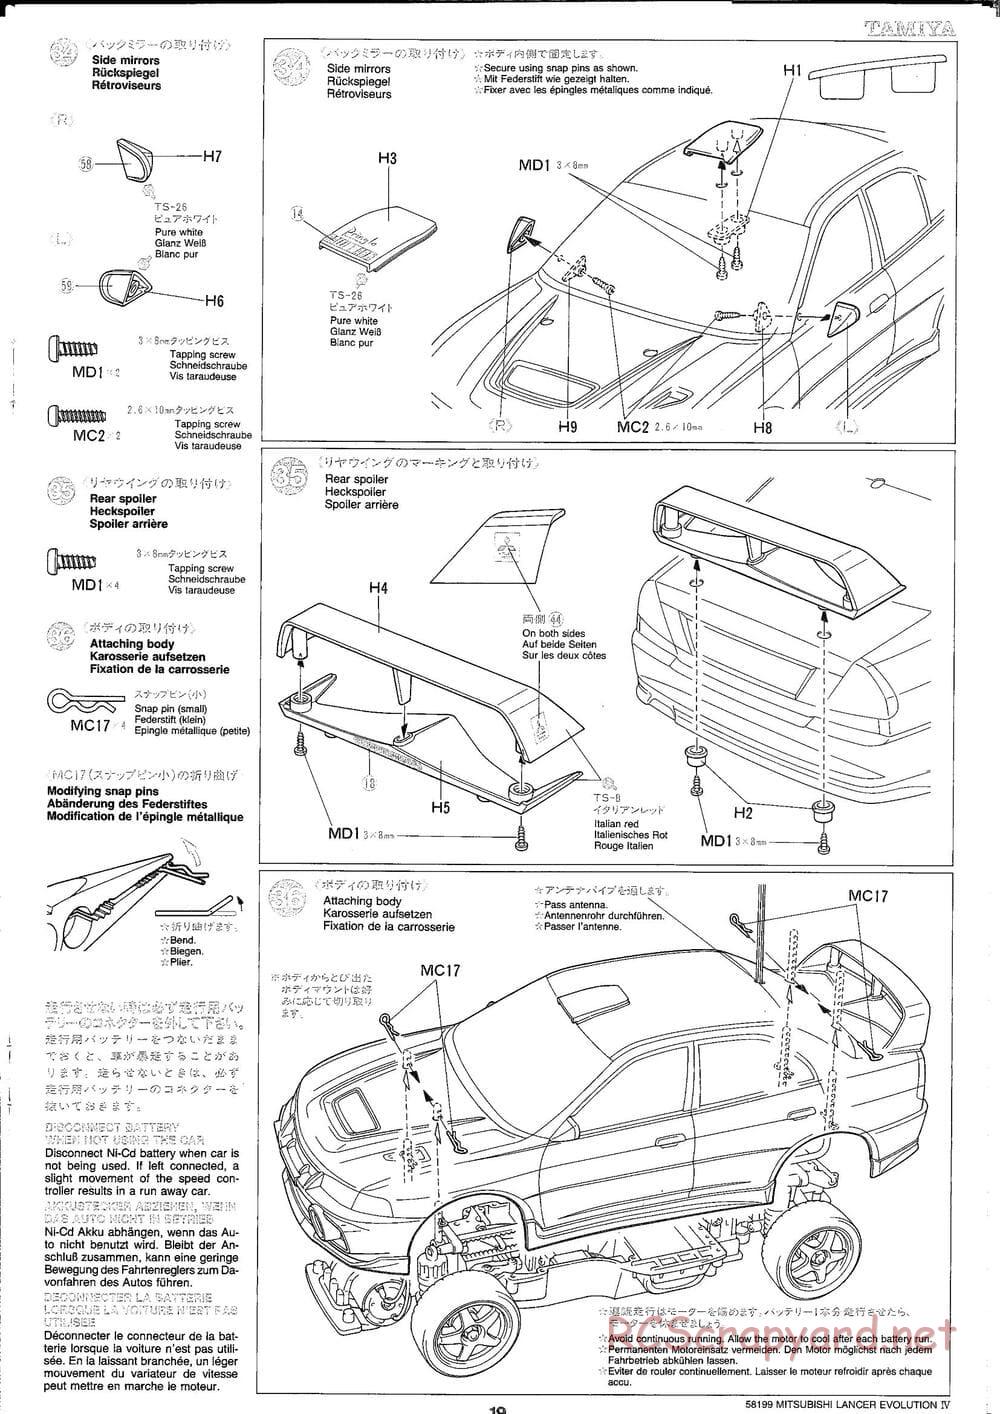 Tamiya - Mitsubishi Lancer Evolution IV - TA-03F Chassis - Manual - Page 19